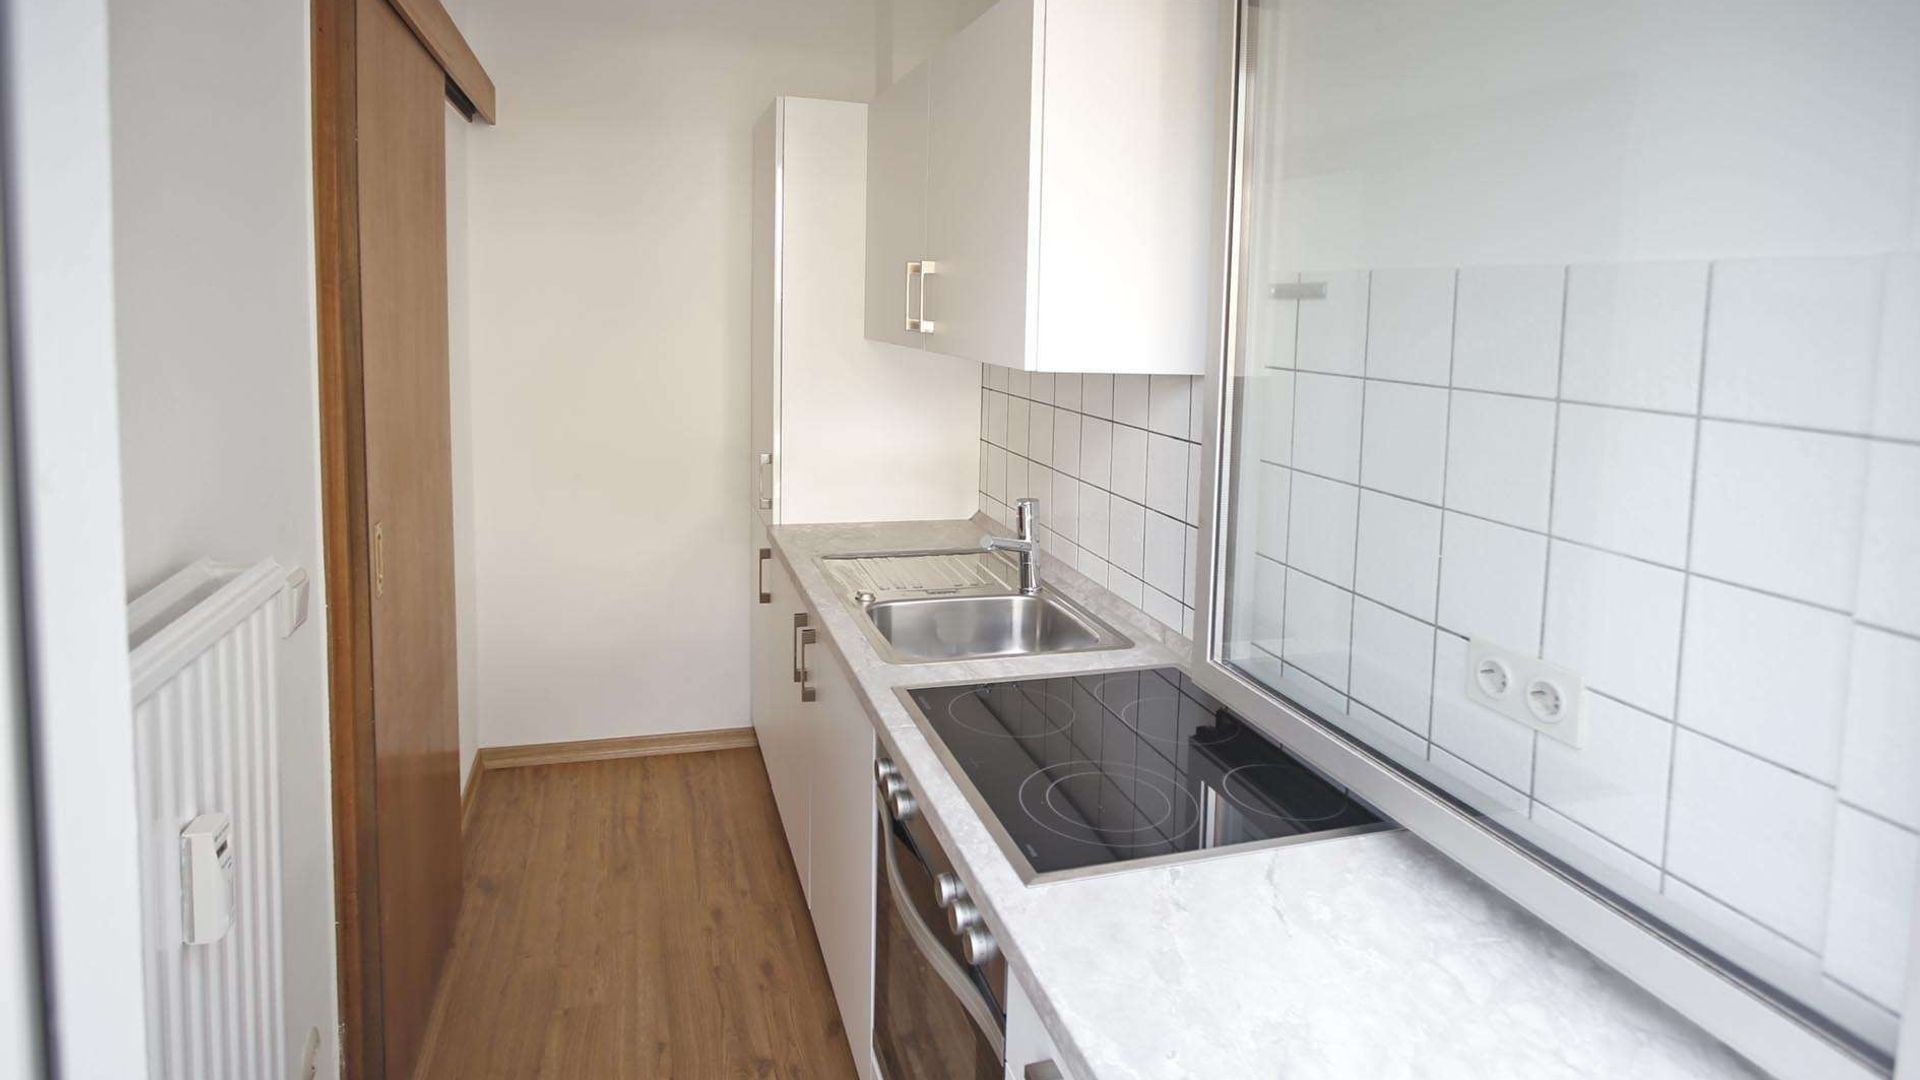 1 bedroom apartment at Luegallee 40545 Dusseldorf Germany 37242167 